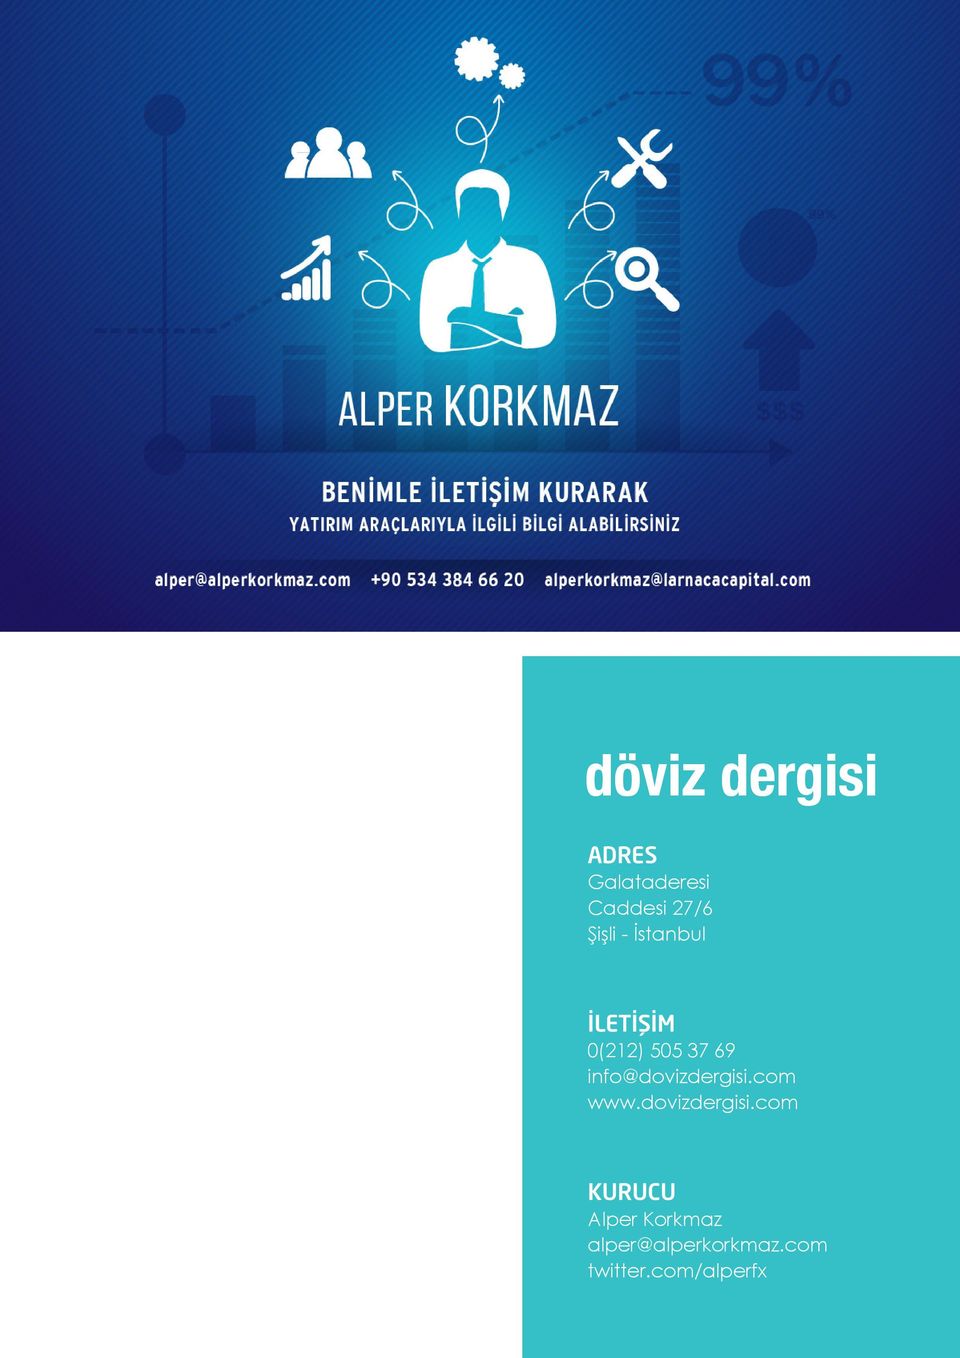 info@dovizdergisi.